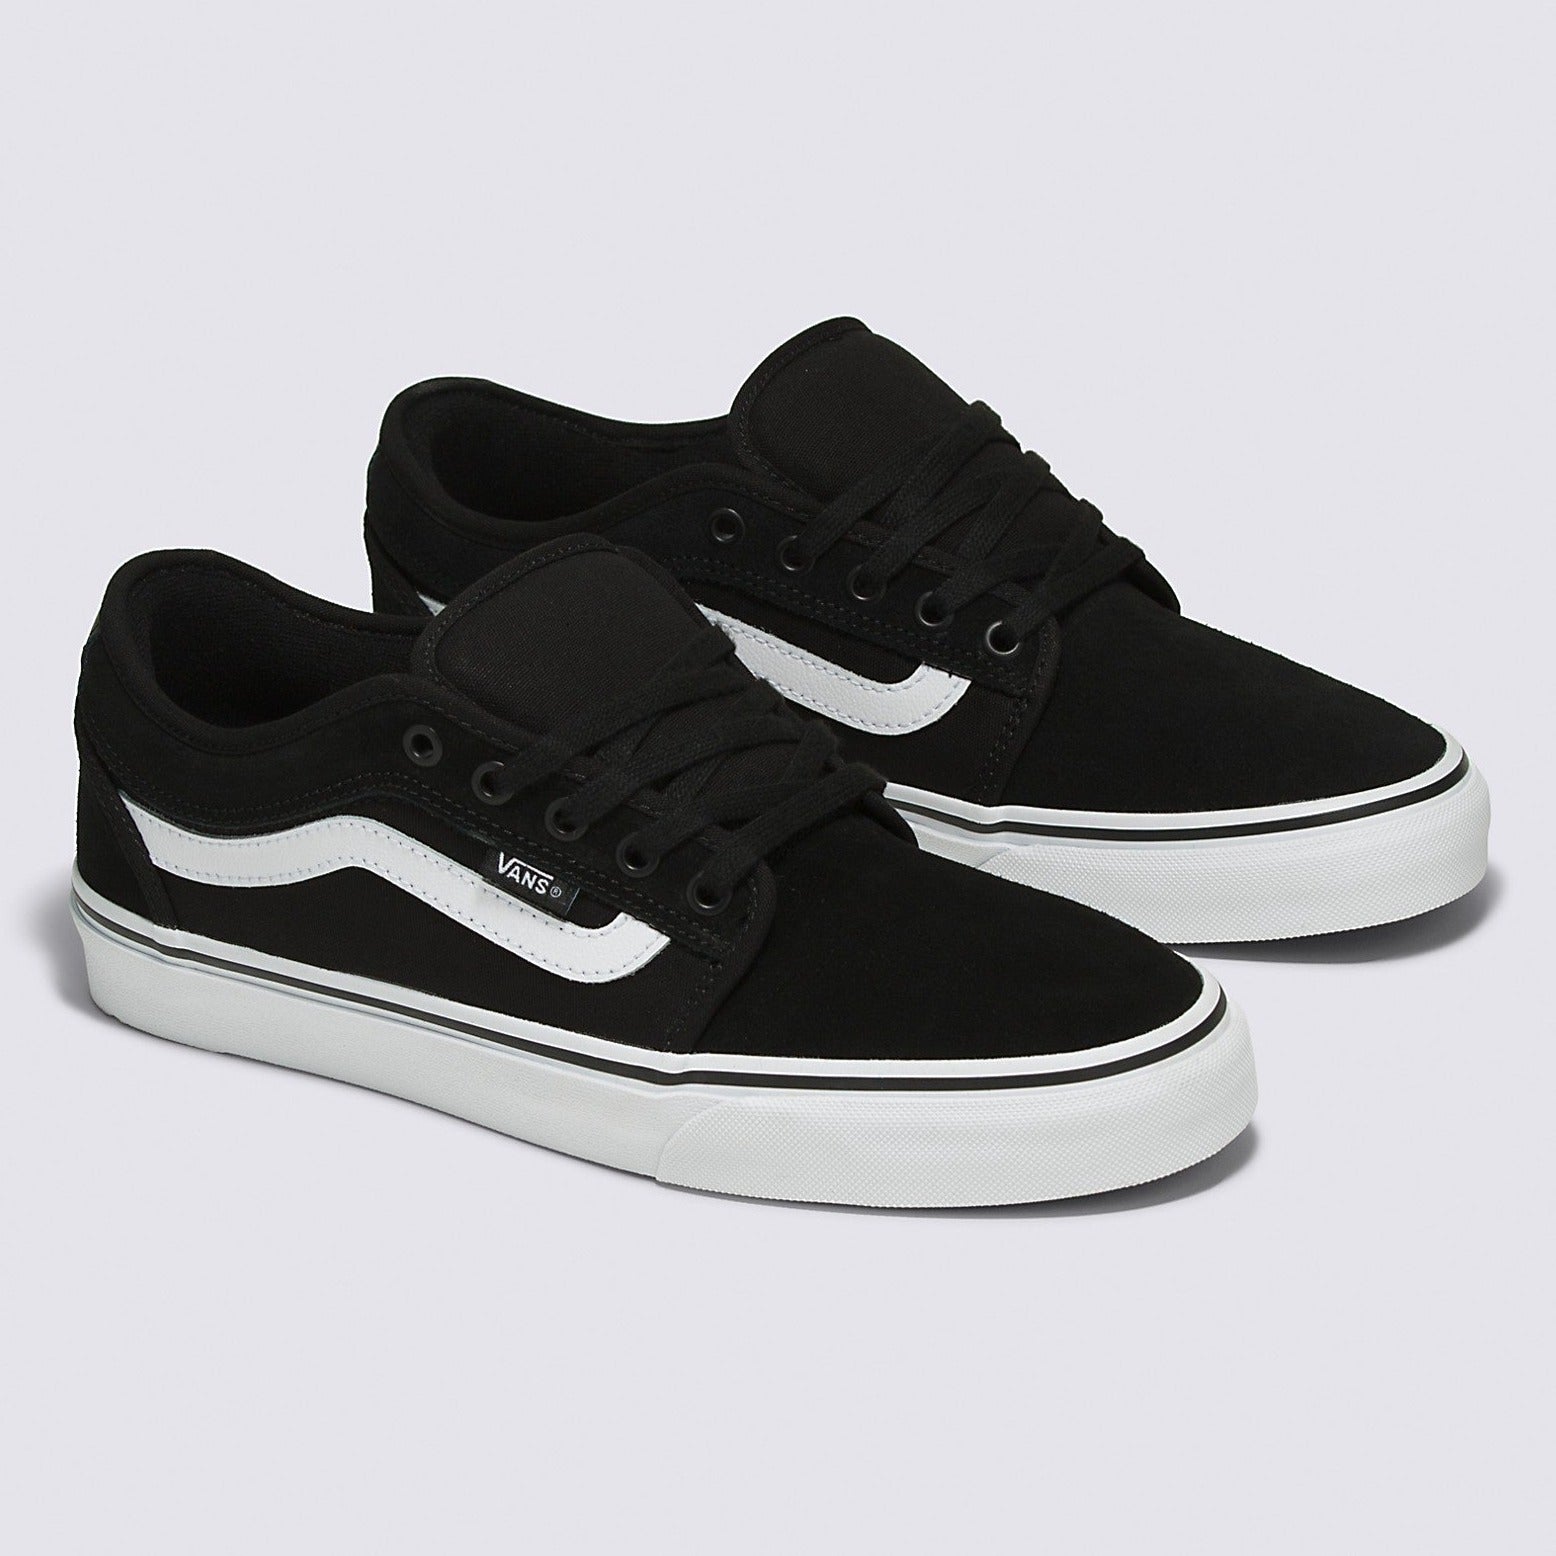 Black/White Chukka Low Sidestripe Vans Skateboard Shoe